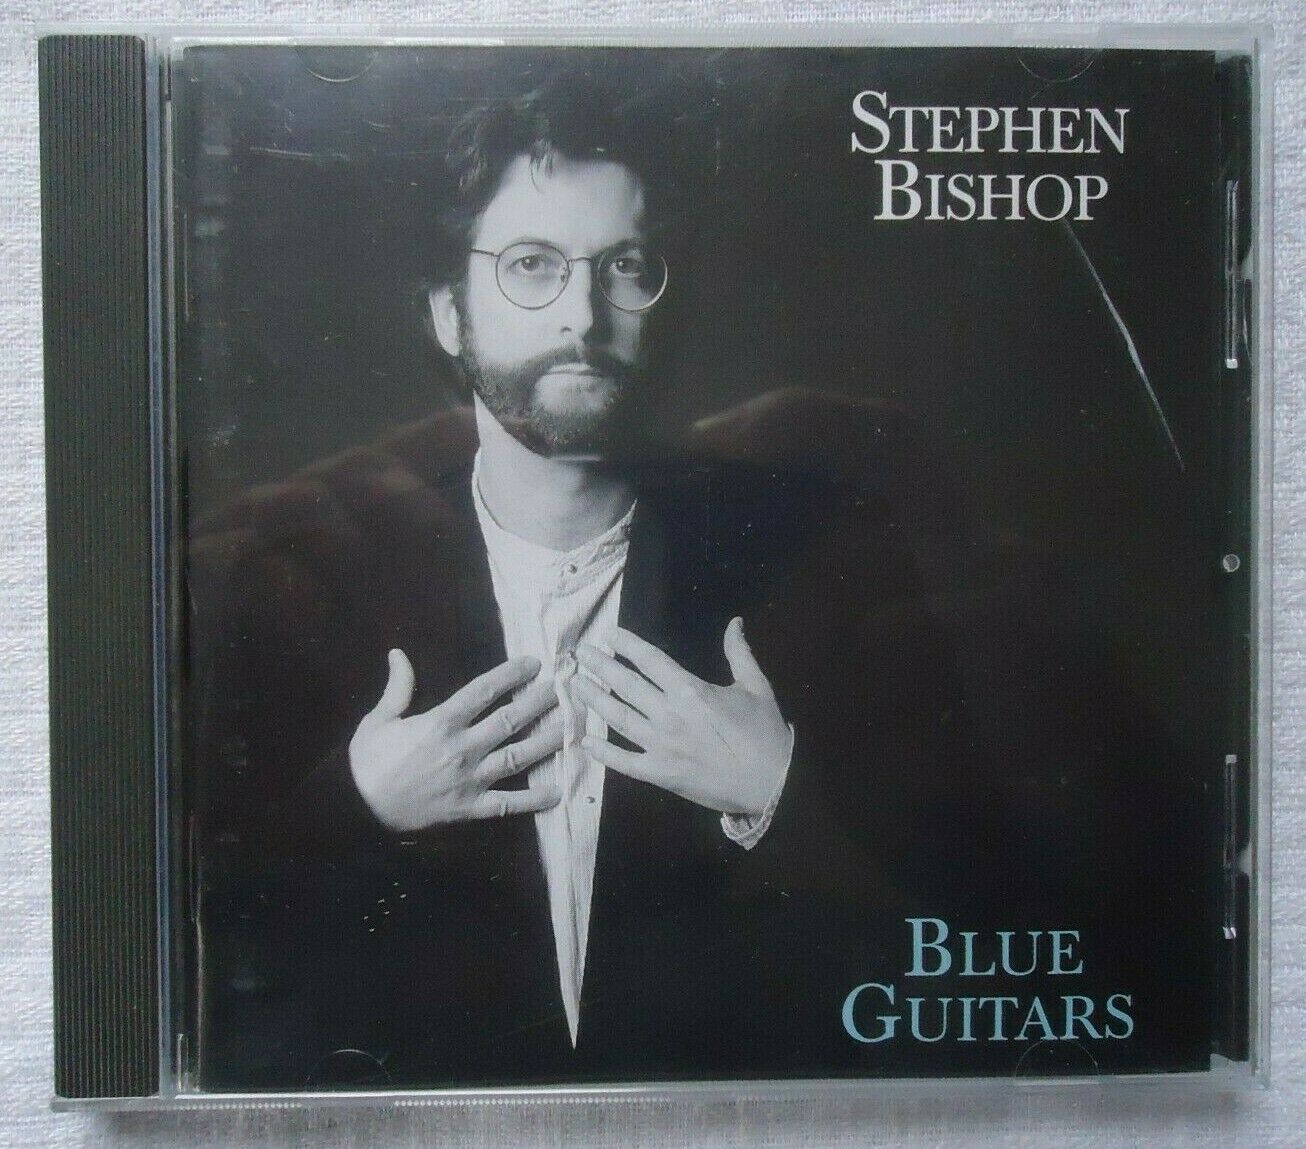 Stephen bishop with hair